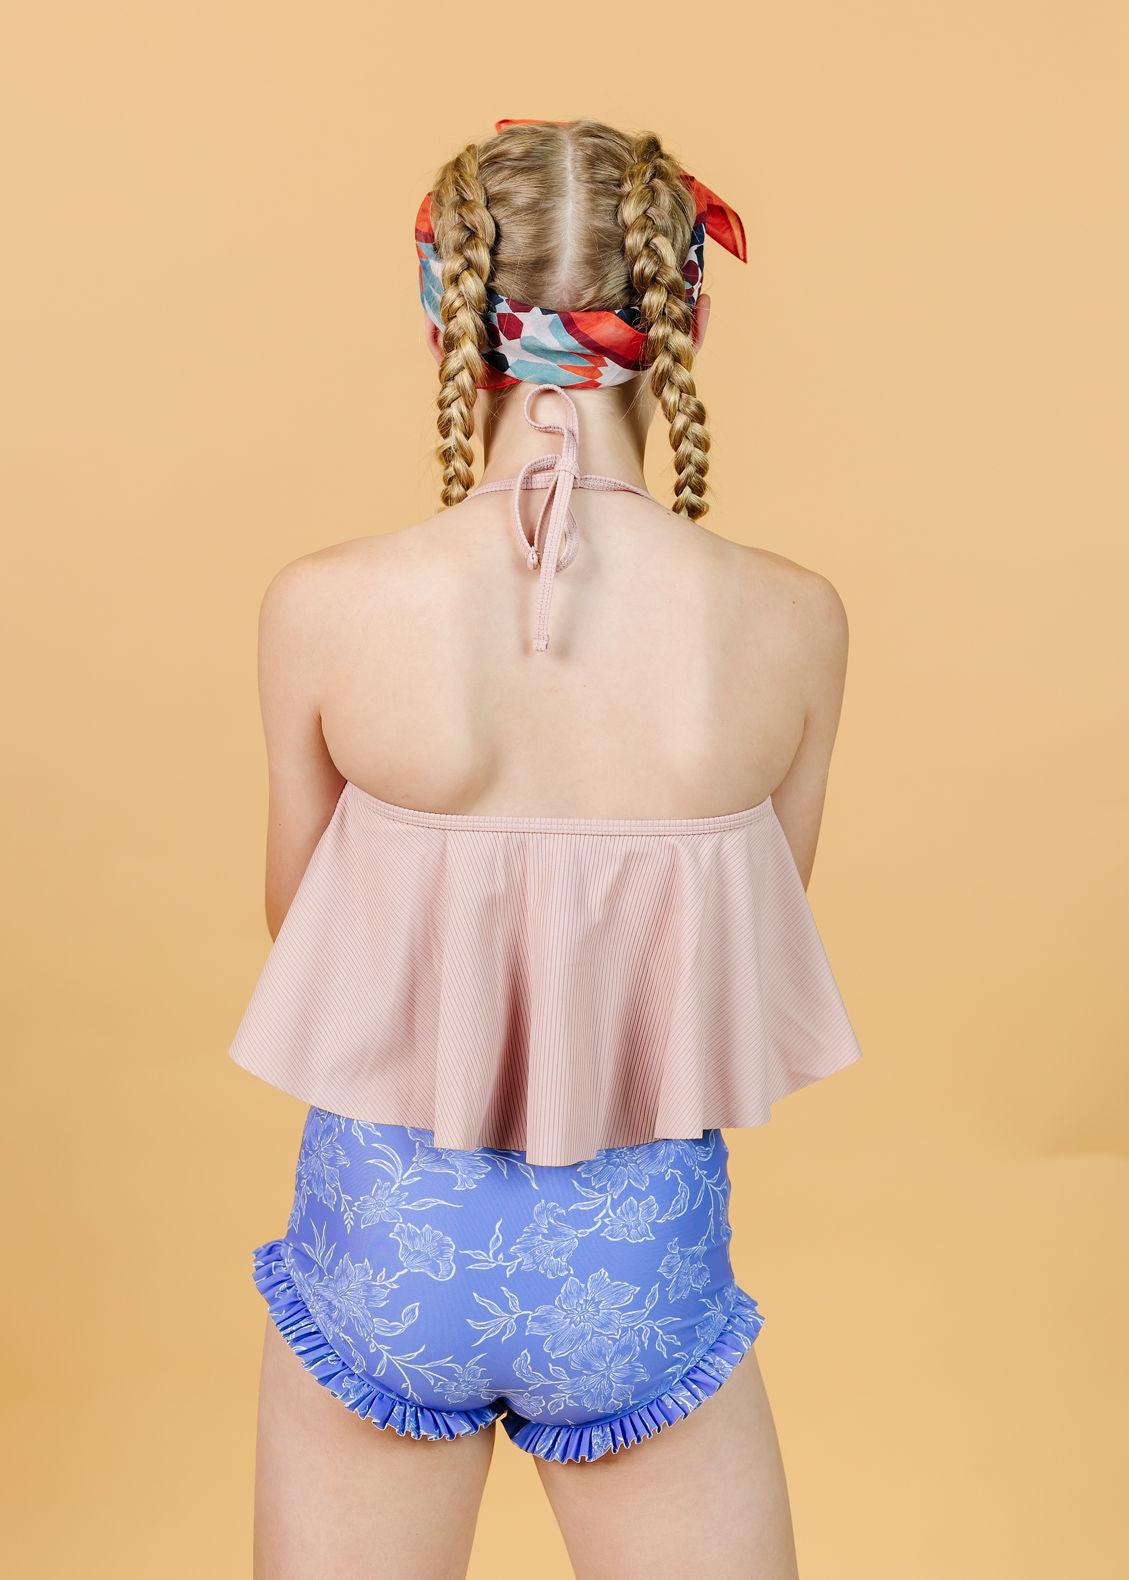 Teen Girl High-Waisted Swimsuit Bottoms - Elegant Floral